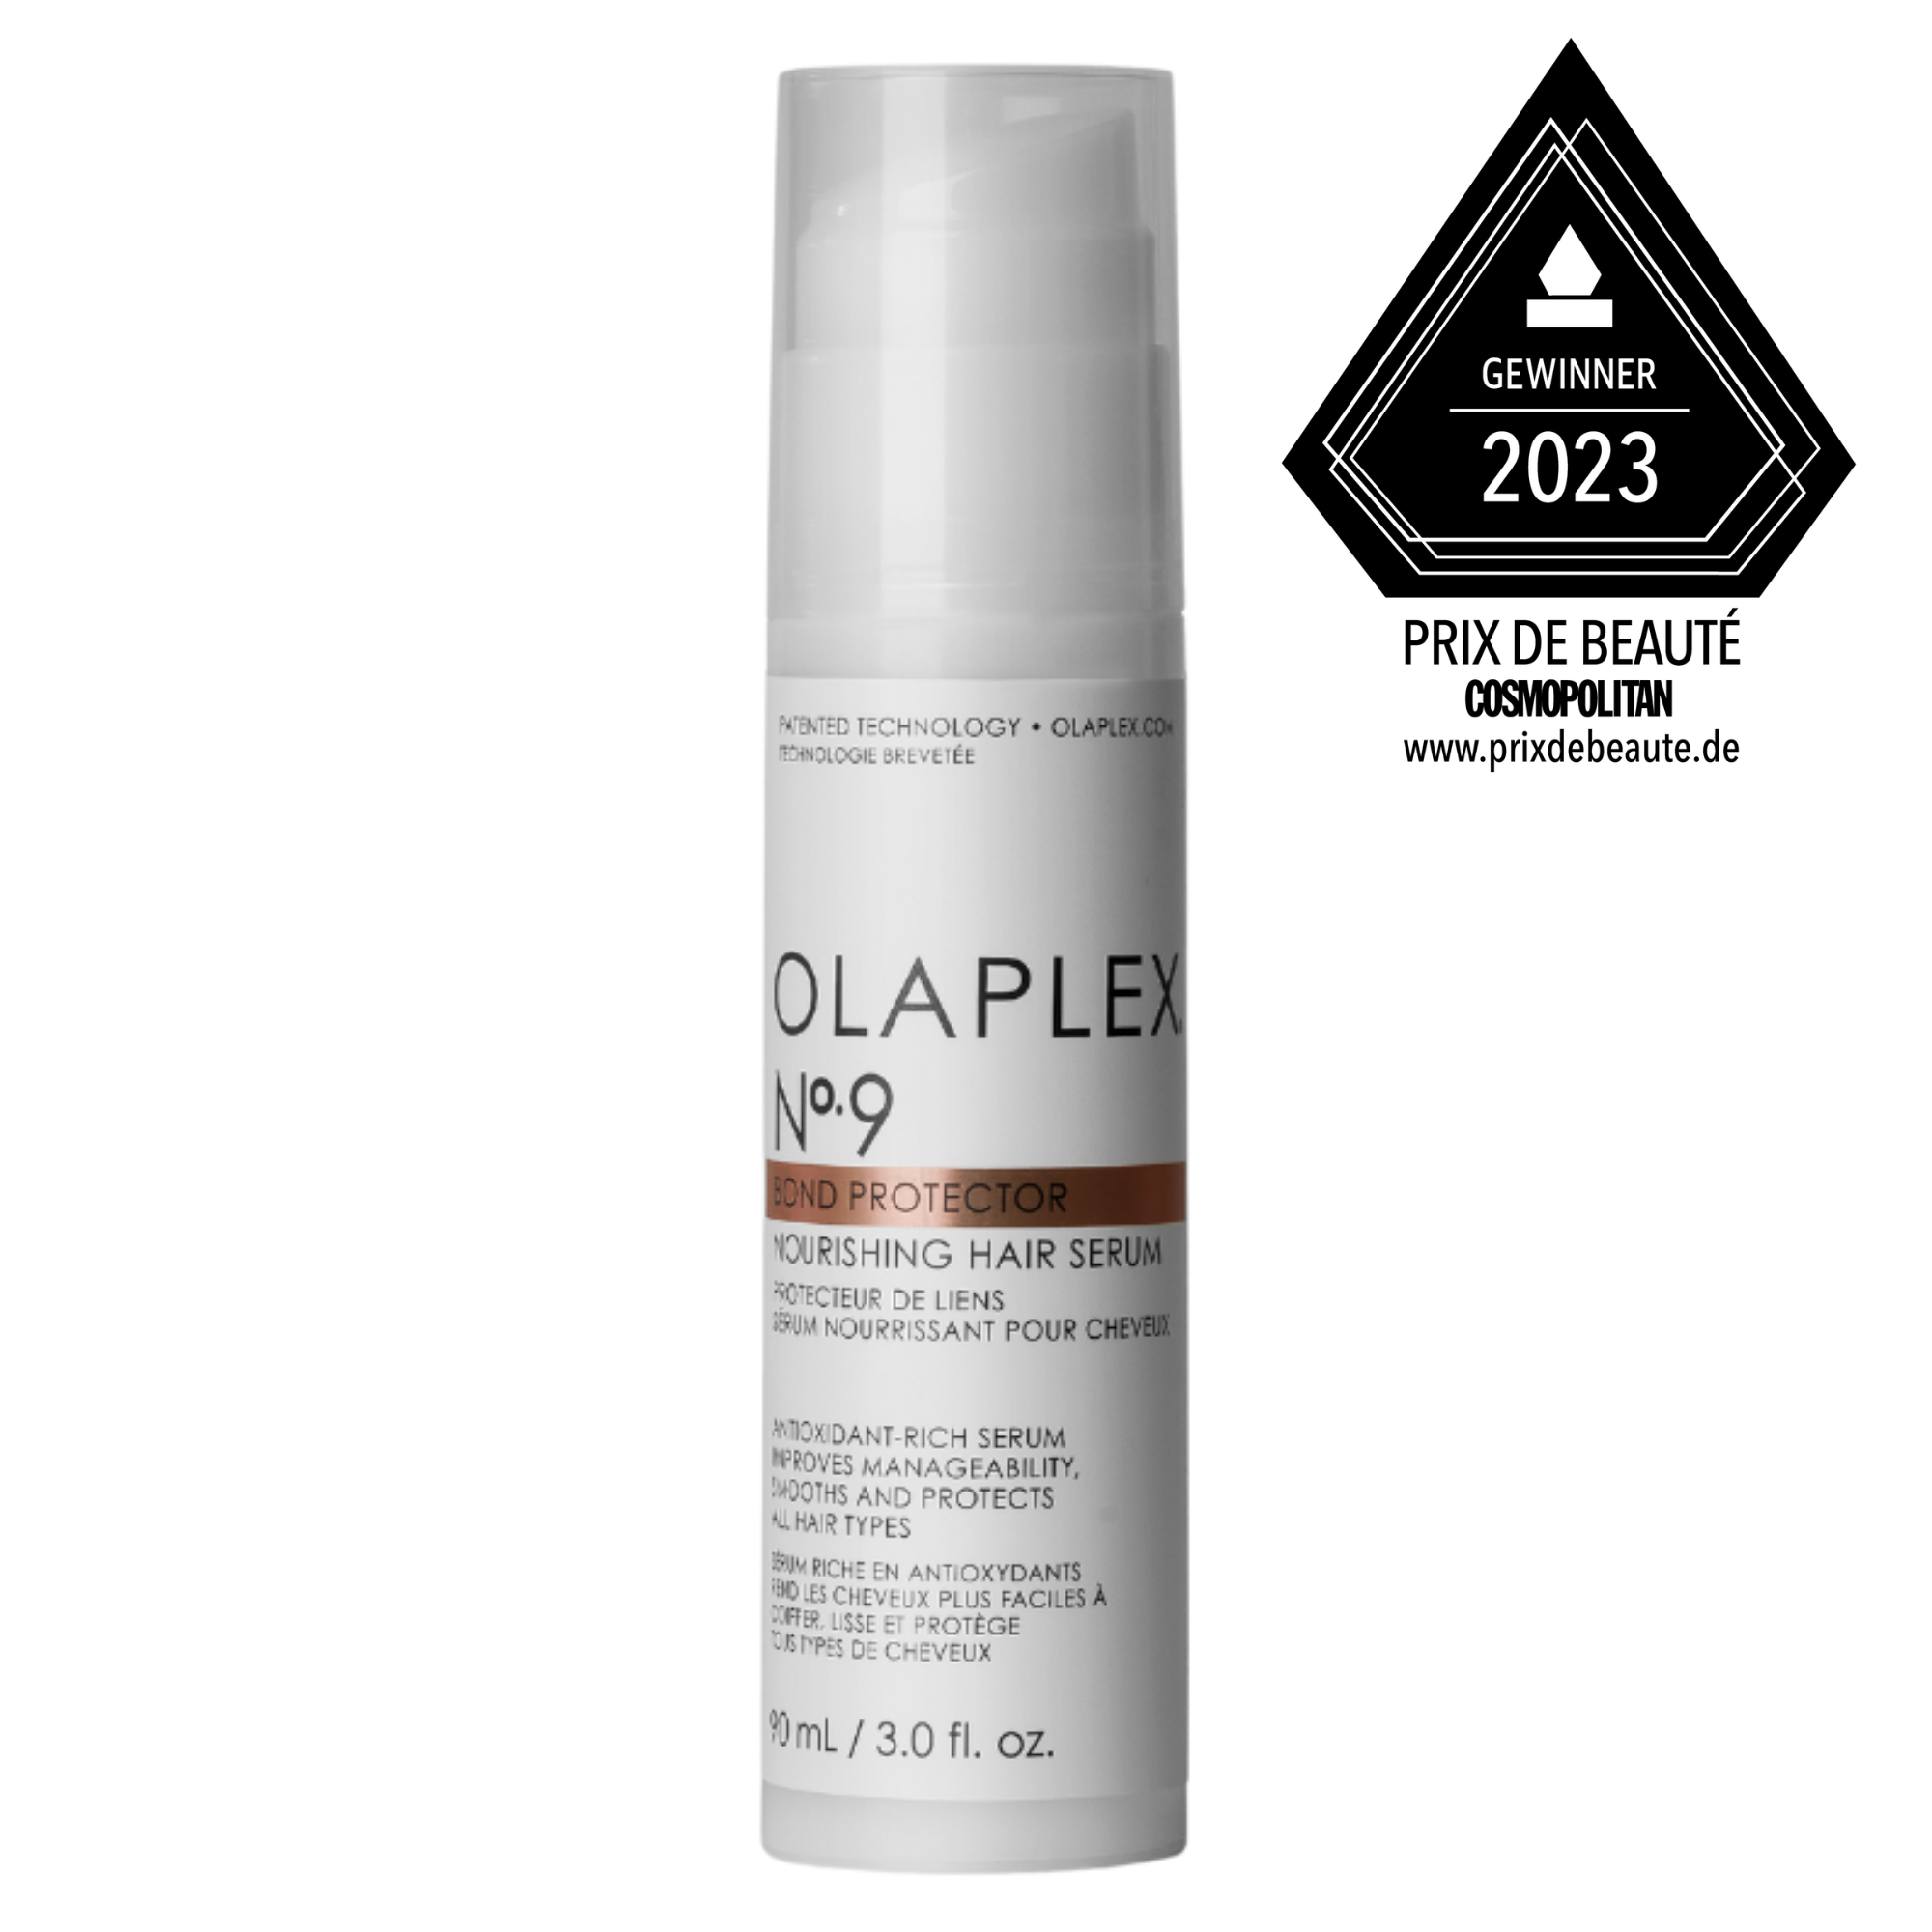 Original OLAPLEX® N°9 Bond Protector Nourishing Hair Serum grid image